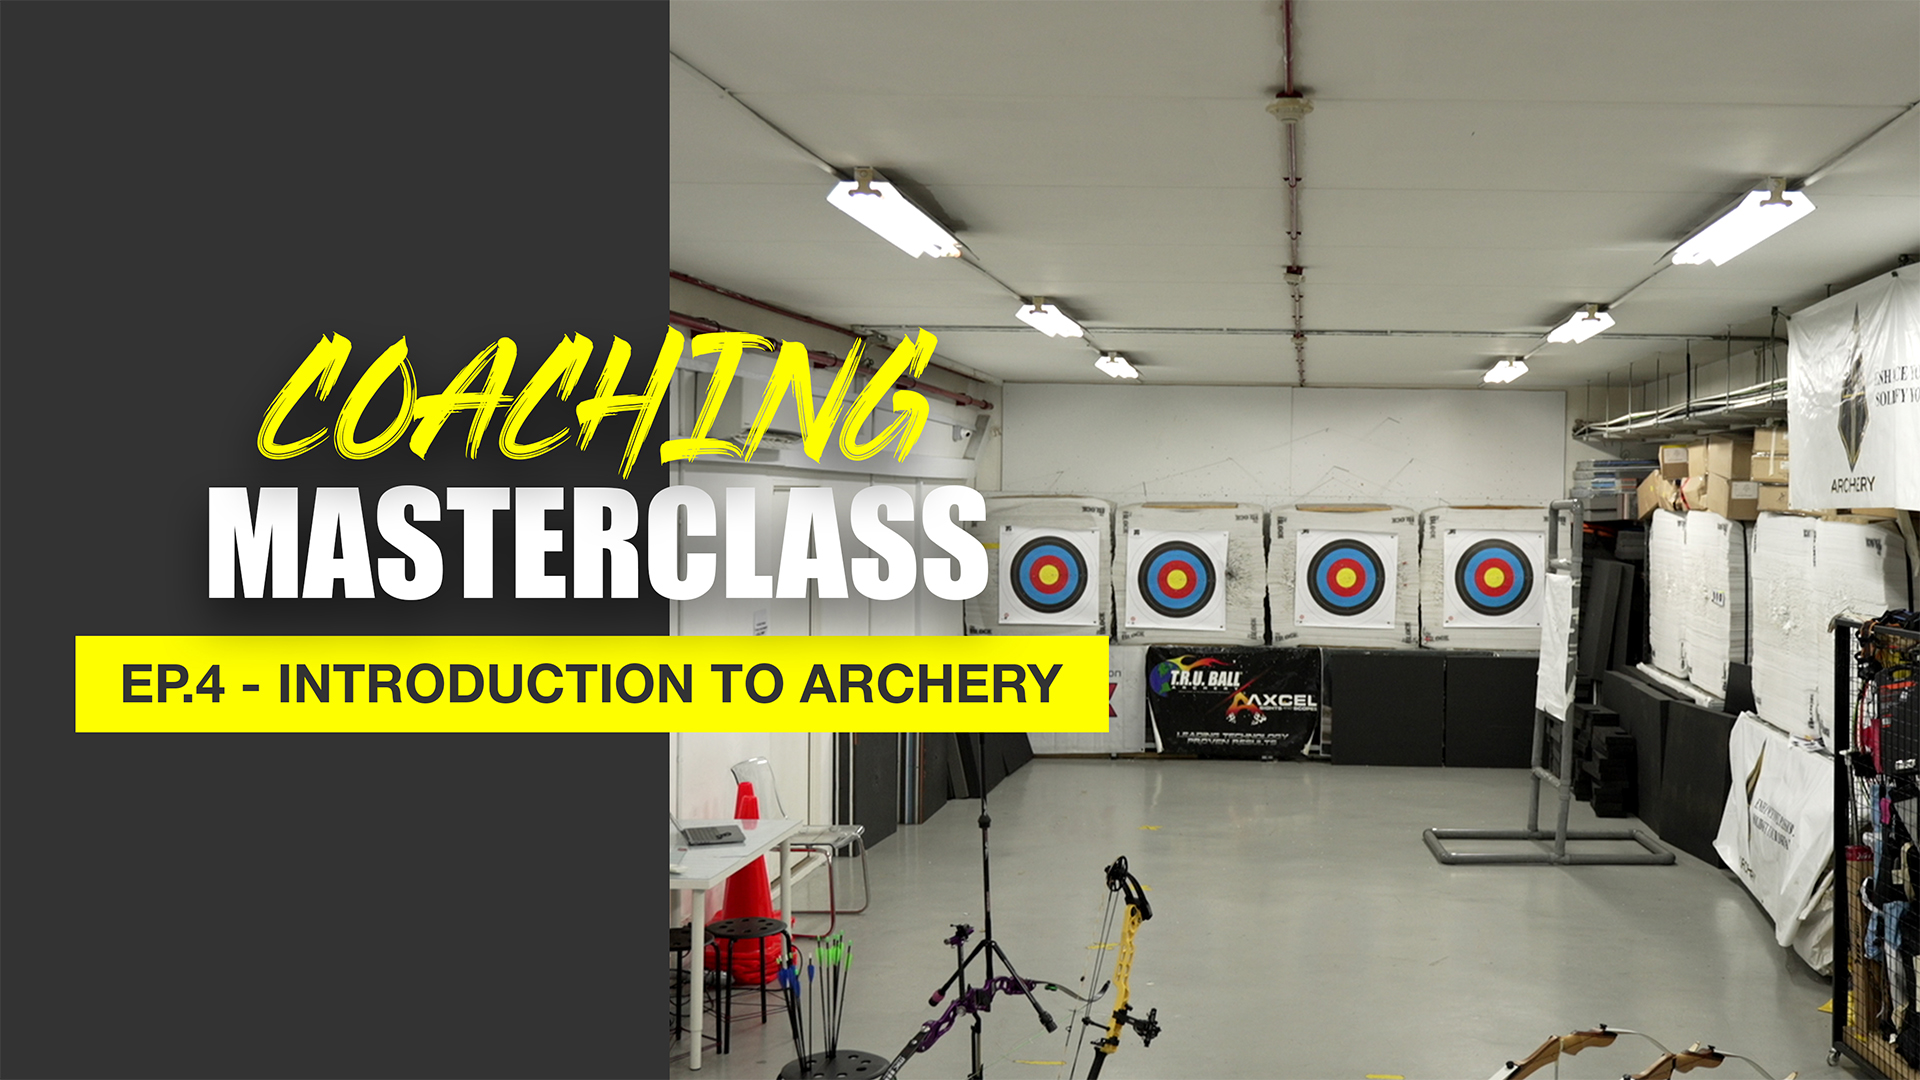 Coaching Masterclass (Archery) Ep 4 - Introduction to Archery